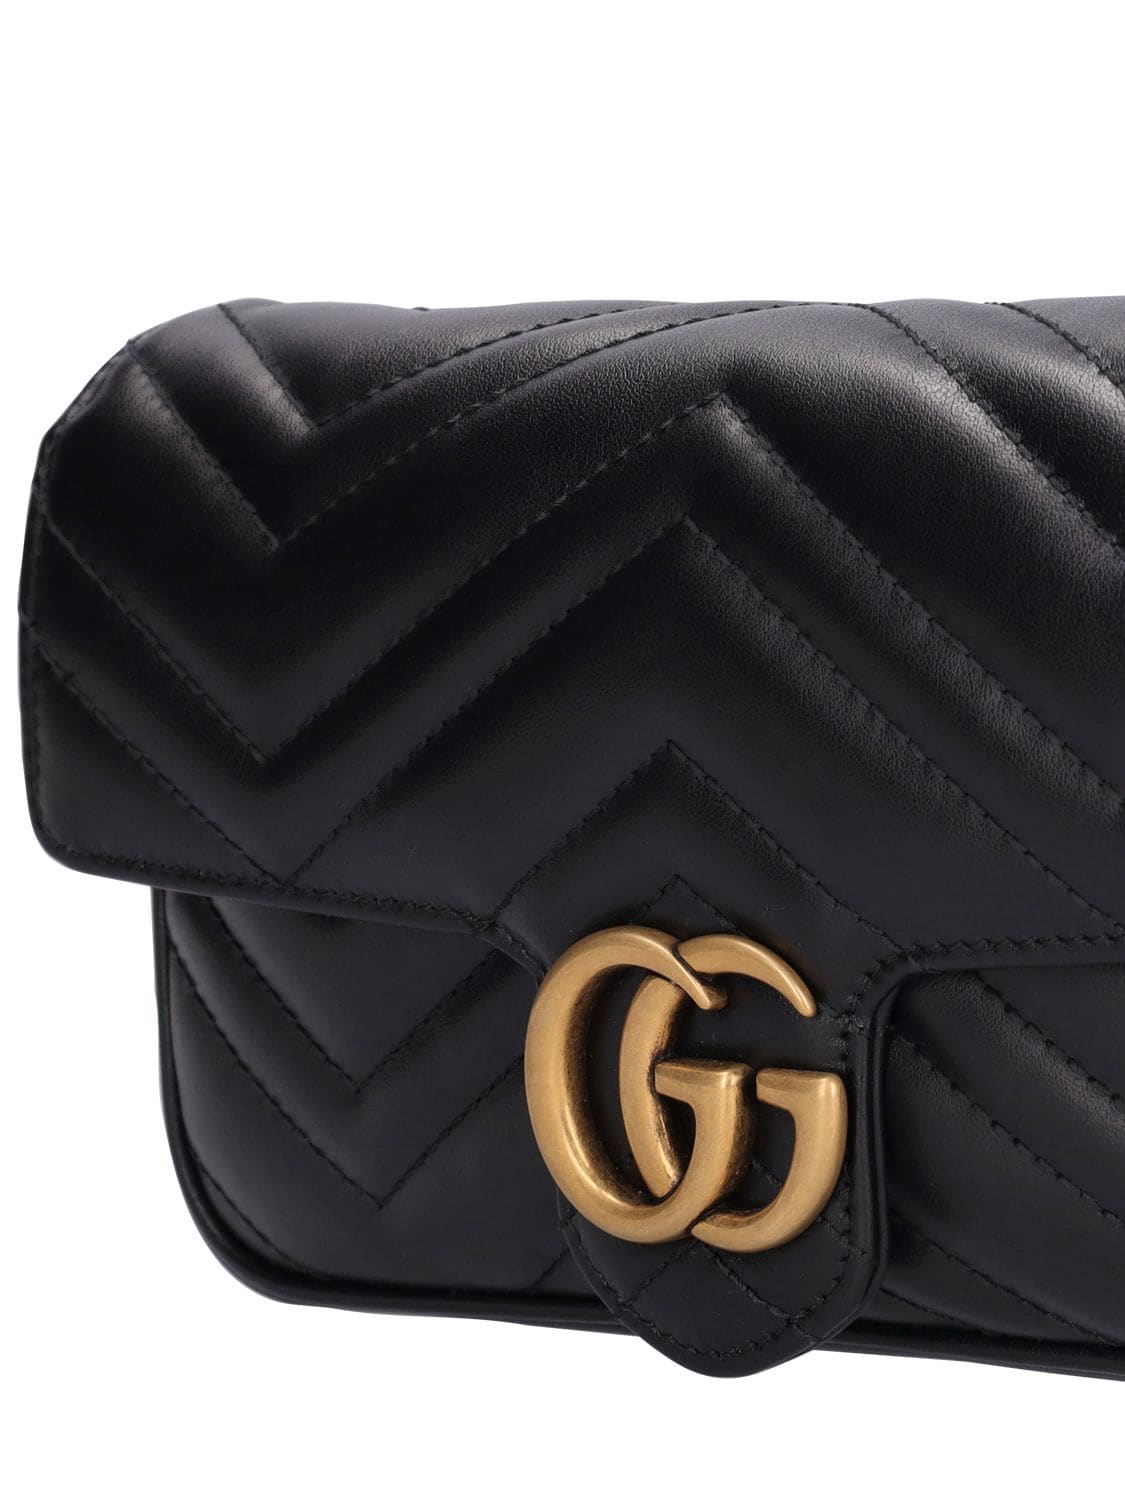 Gucci GG Marmont Shoulder Bag Small black Leather original price $2550